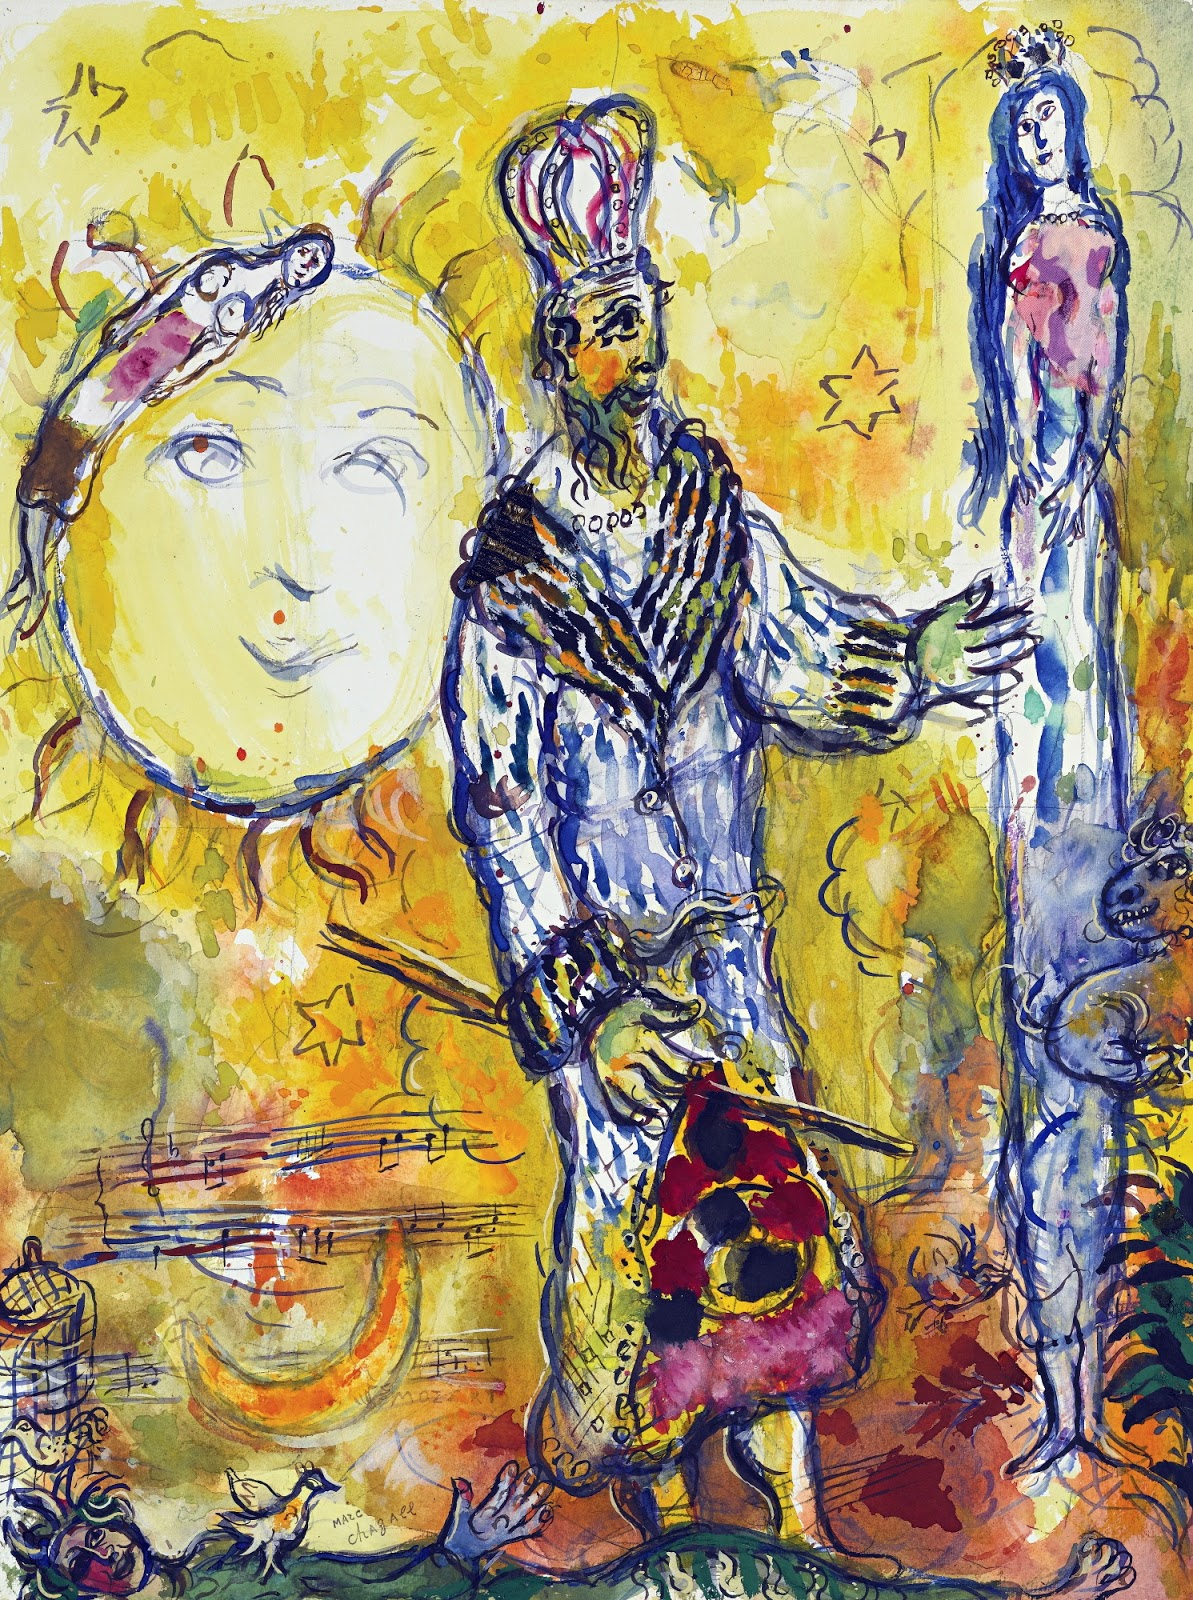 Marc+Chagall-1887-1985 (216).jpg